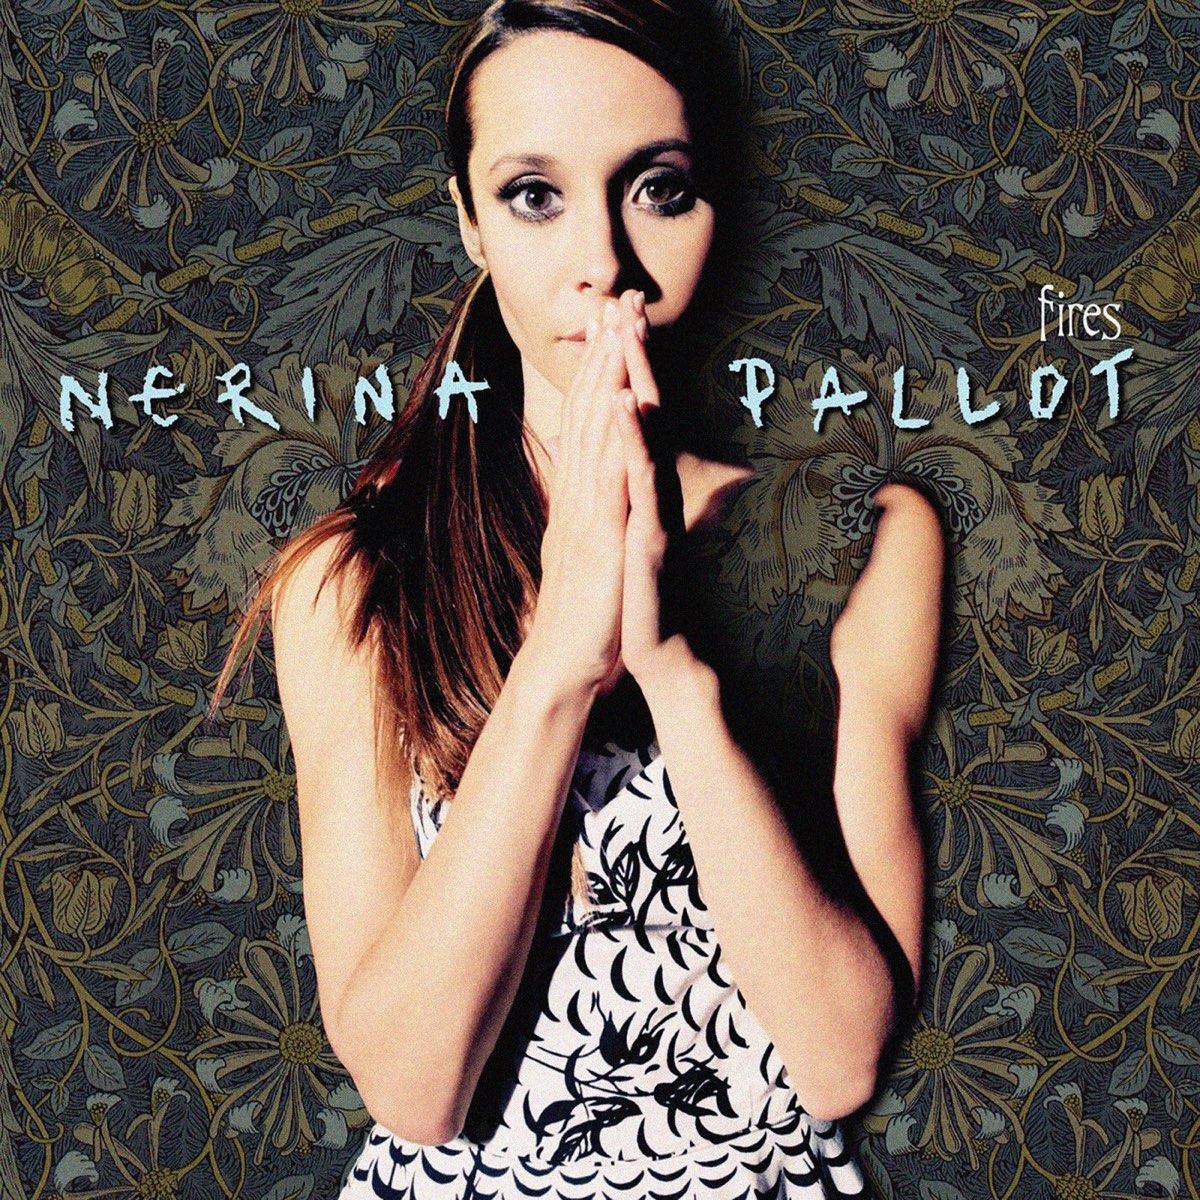 Nerina Pallot Fires cover artwork